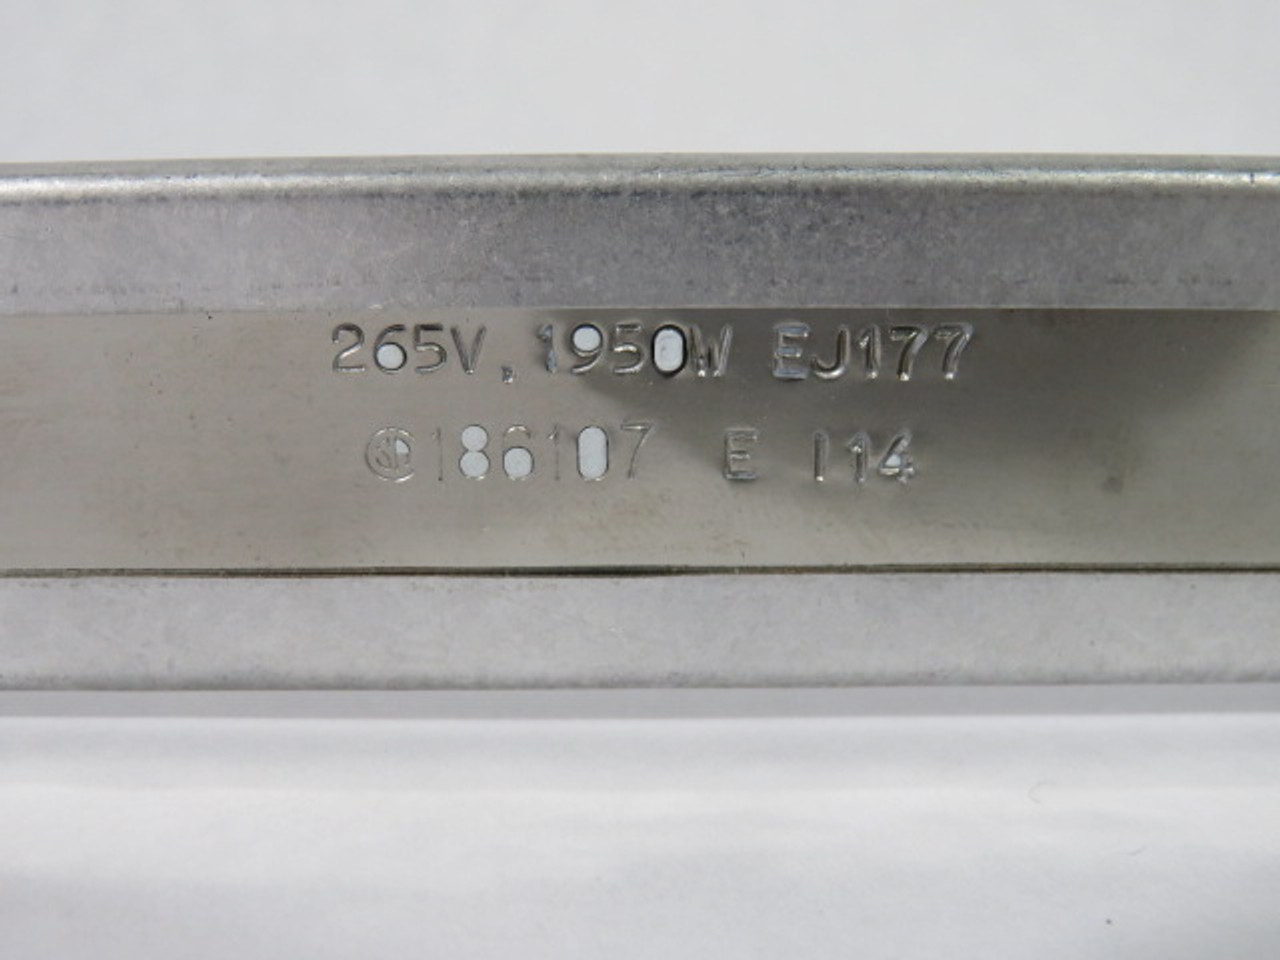 Ace EJ176 Heater 265V 1950W 34"L 1-3/8" W 90 Degree Angle 15" L USED